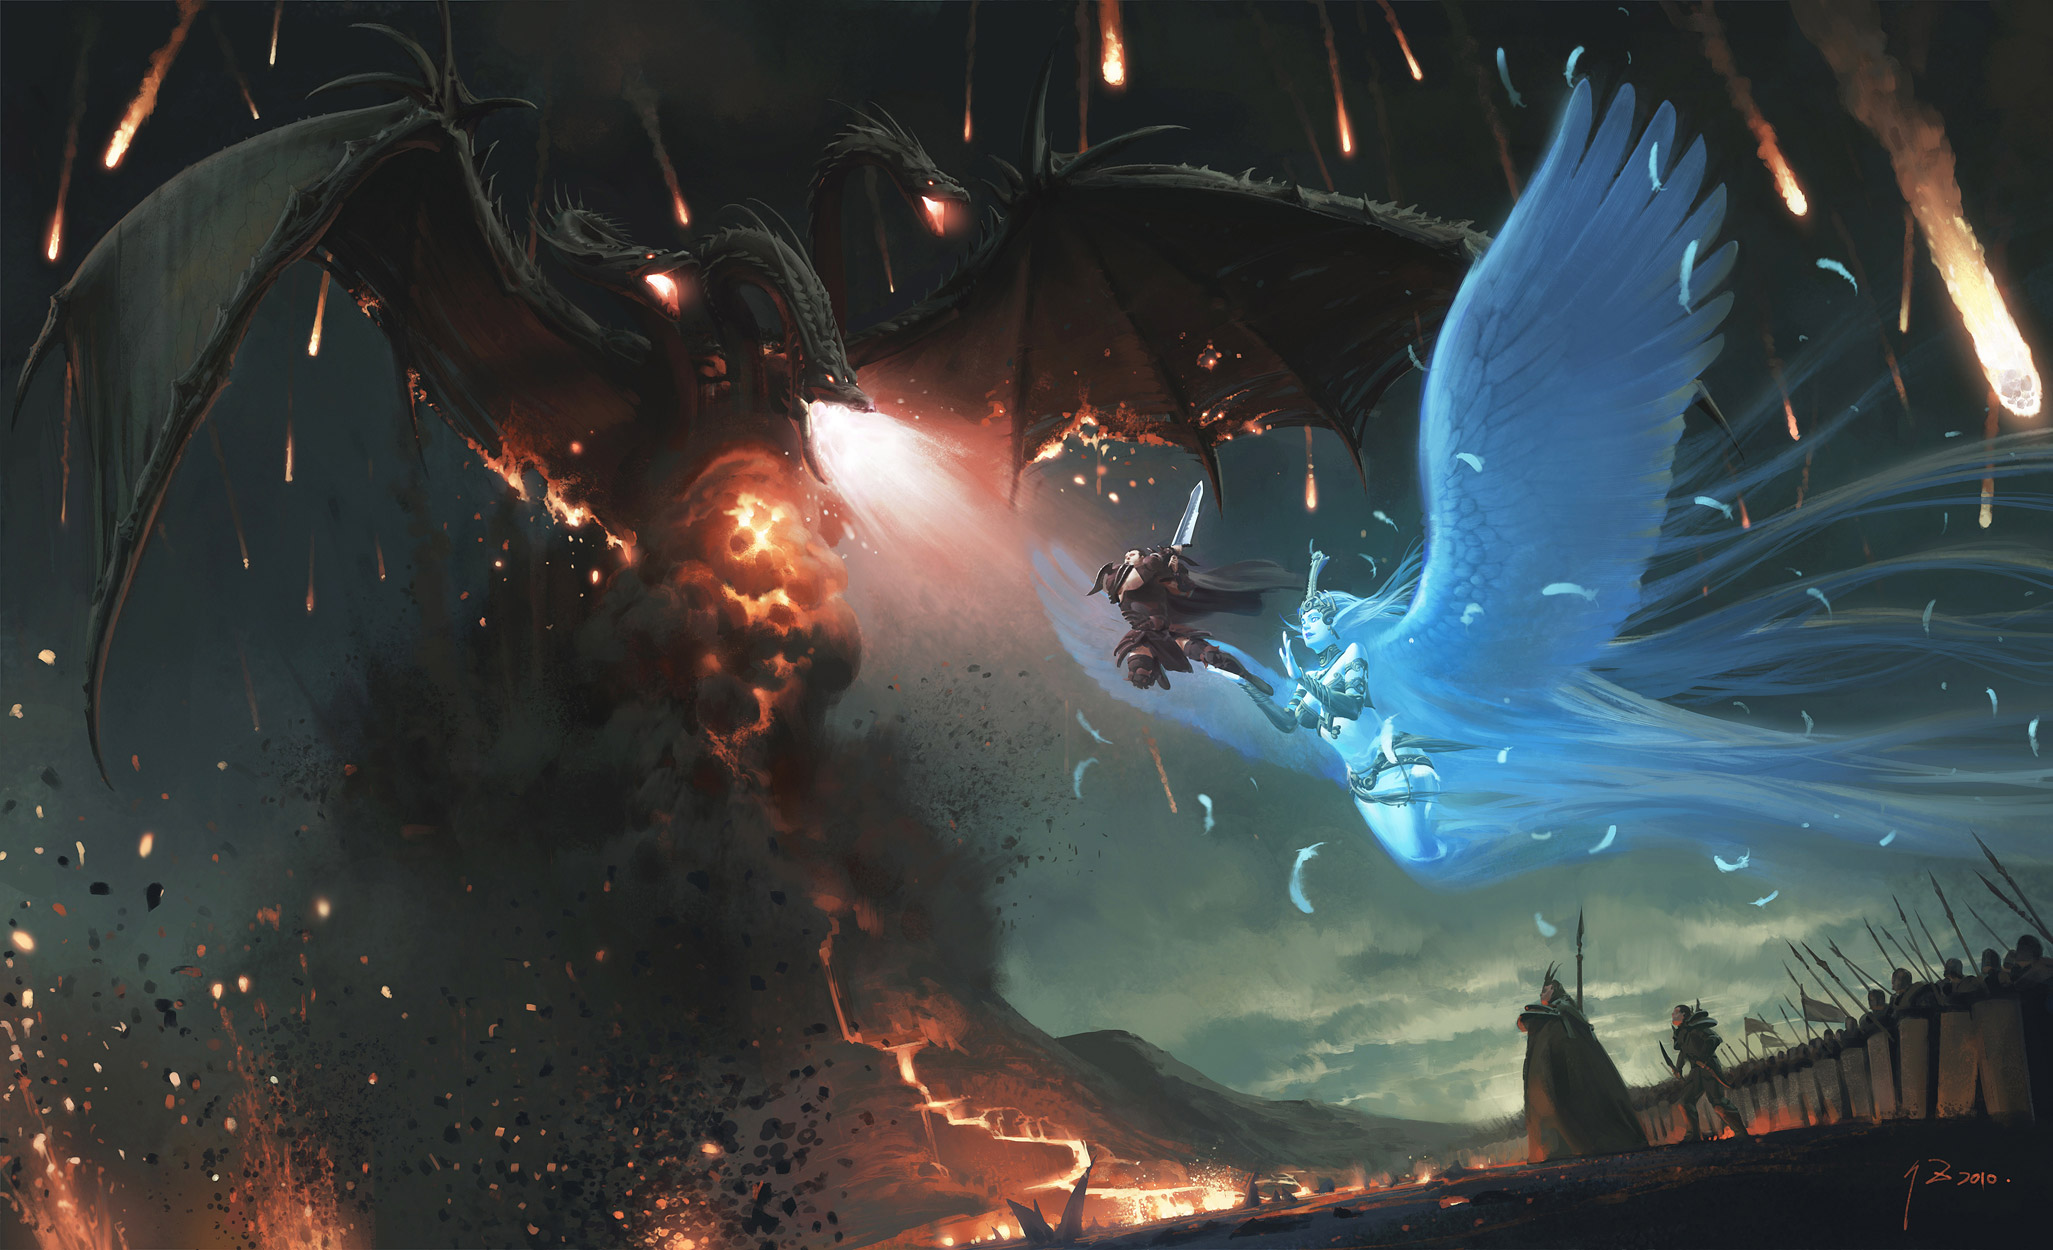 angels, dragons, battles - desktop wallpaper